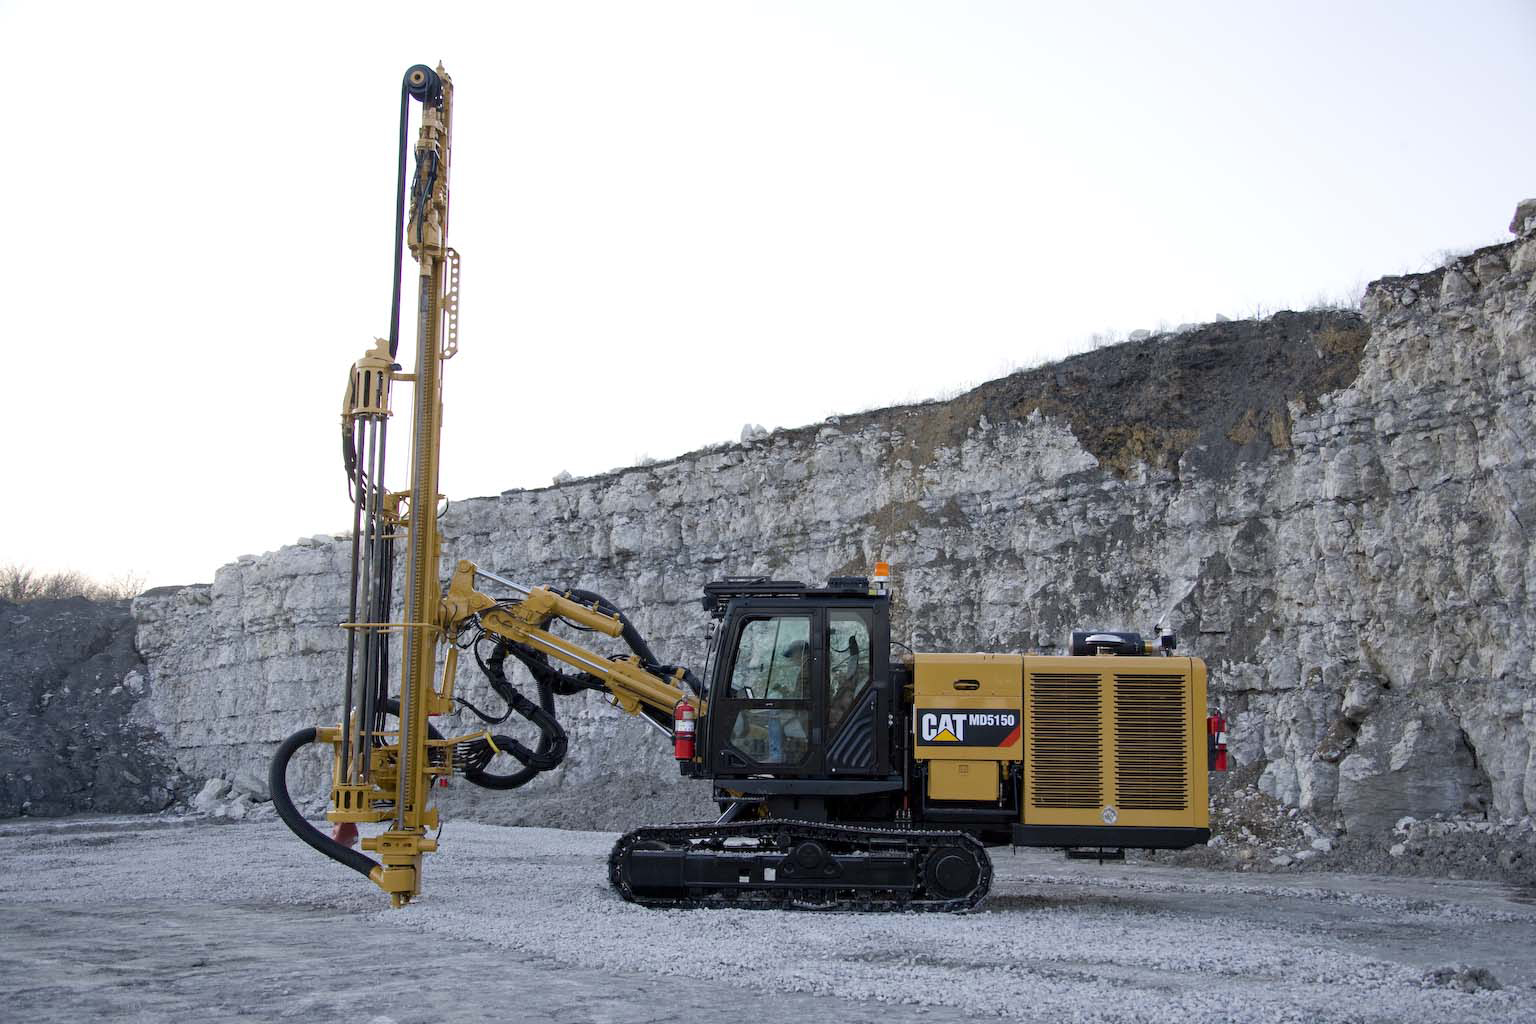 Caterpillar MD5150 track drill in quarry